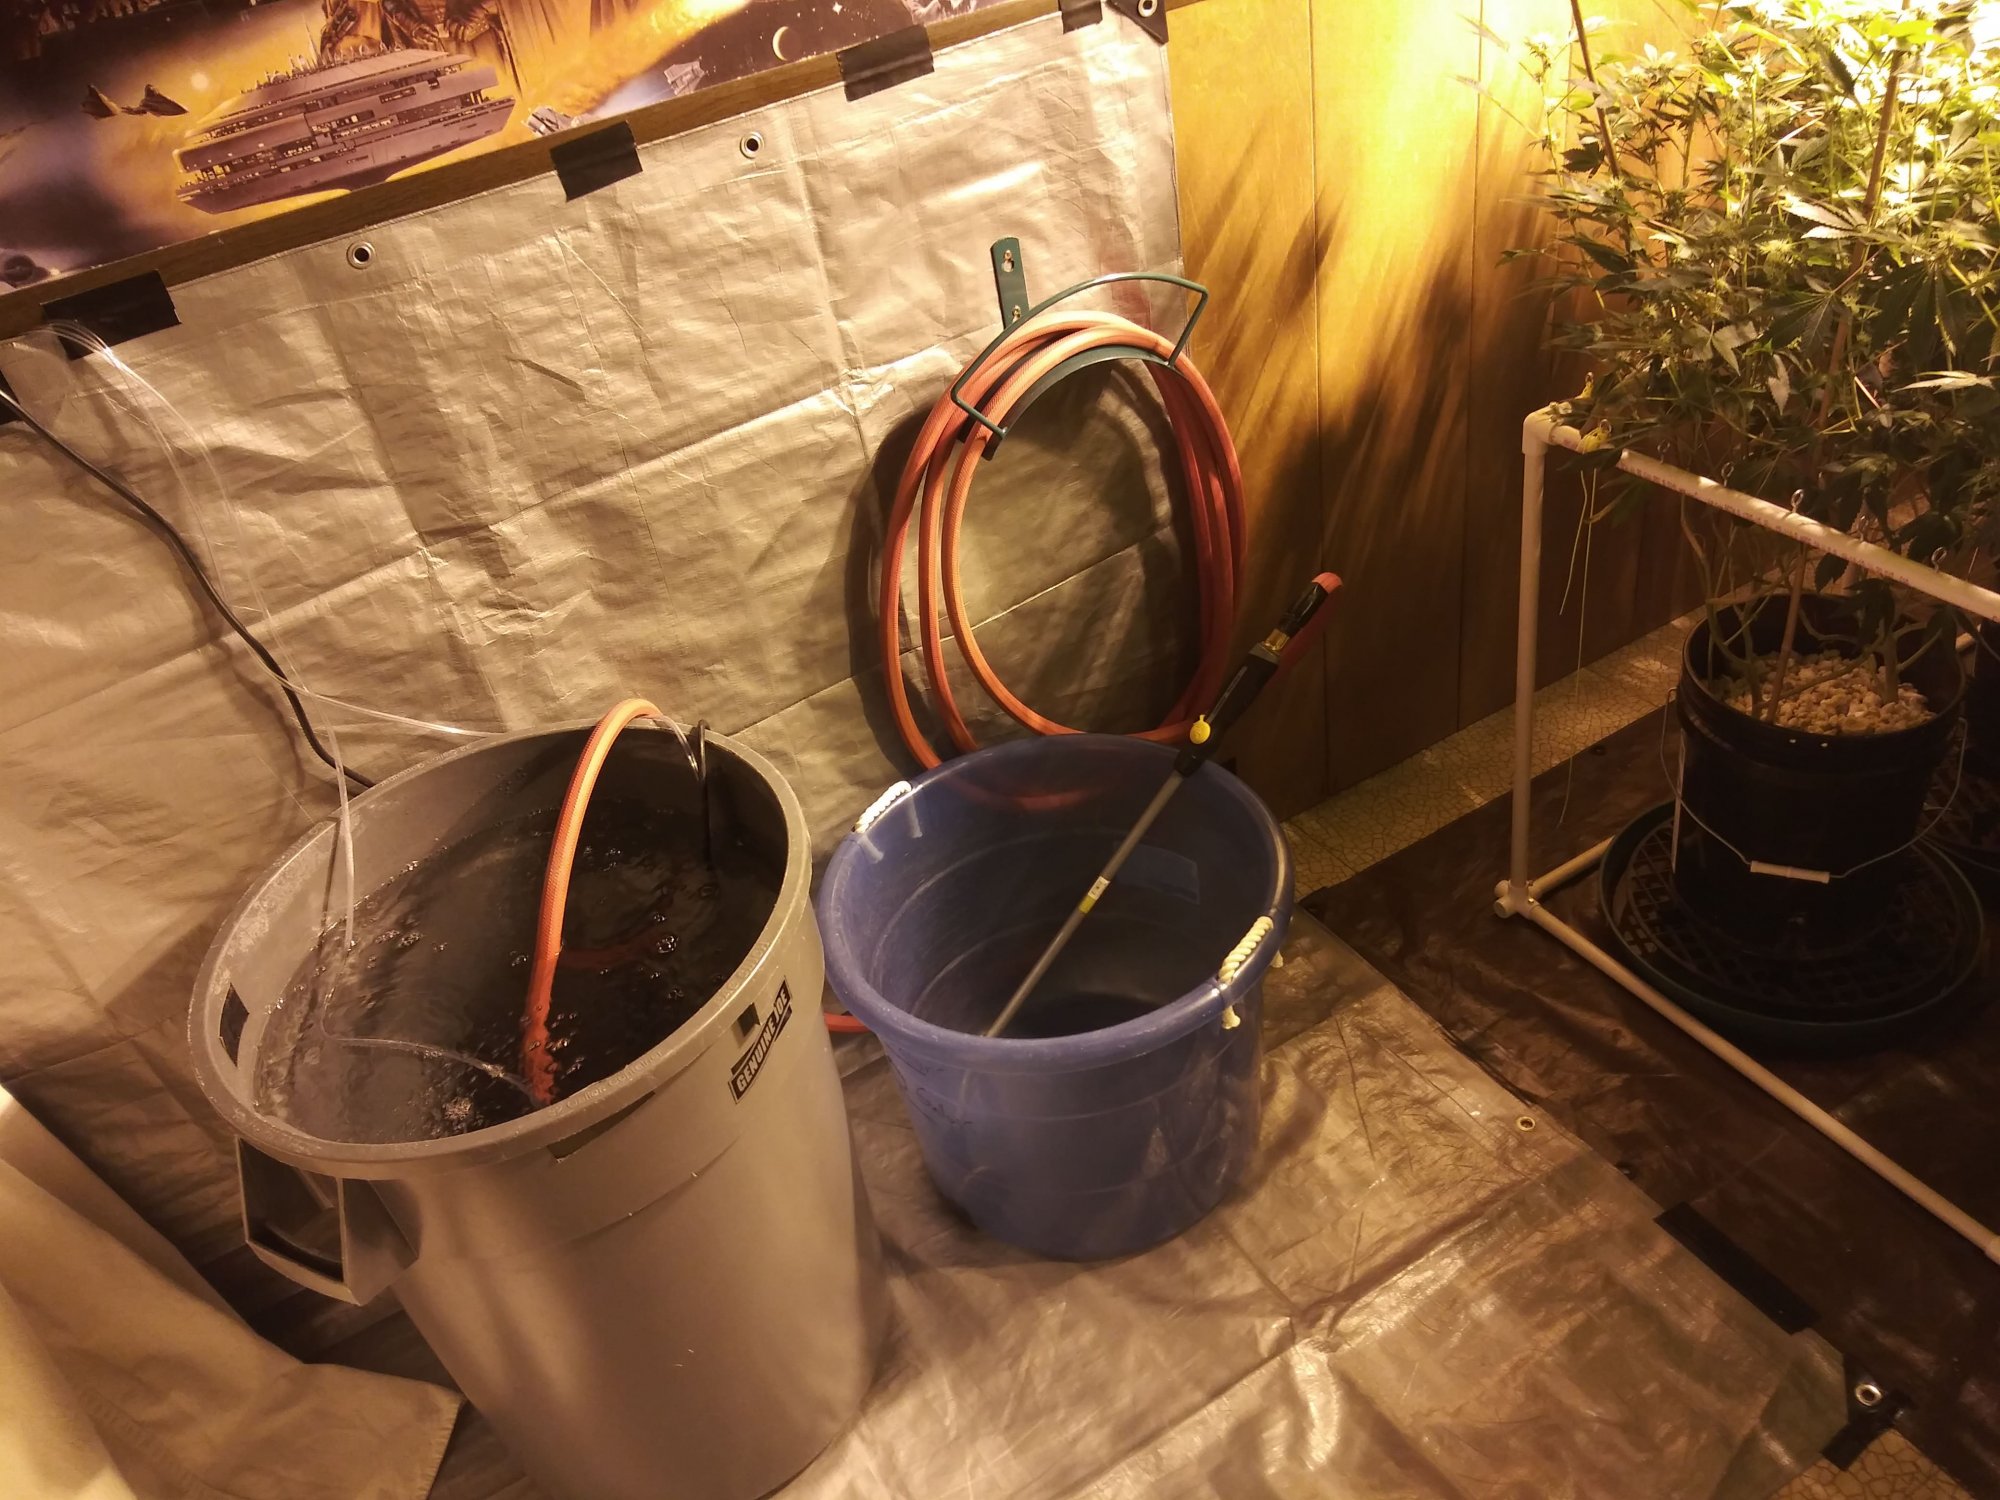 Hash plant hempy buckets under 2x1000w in a perpetual garden